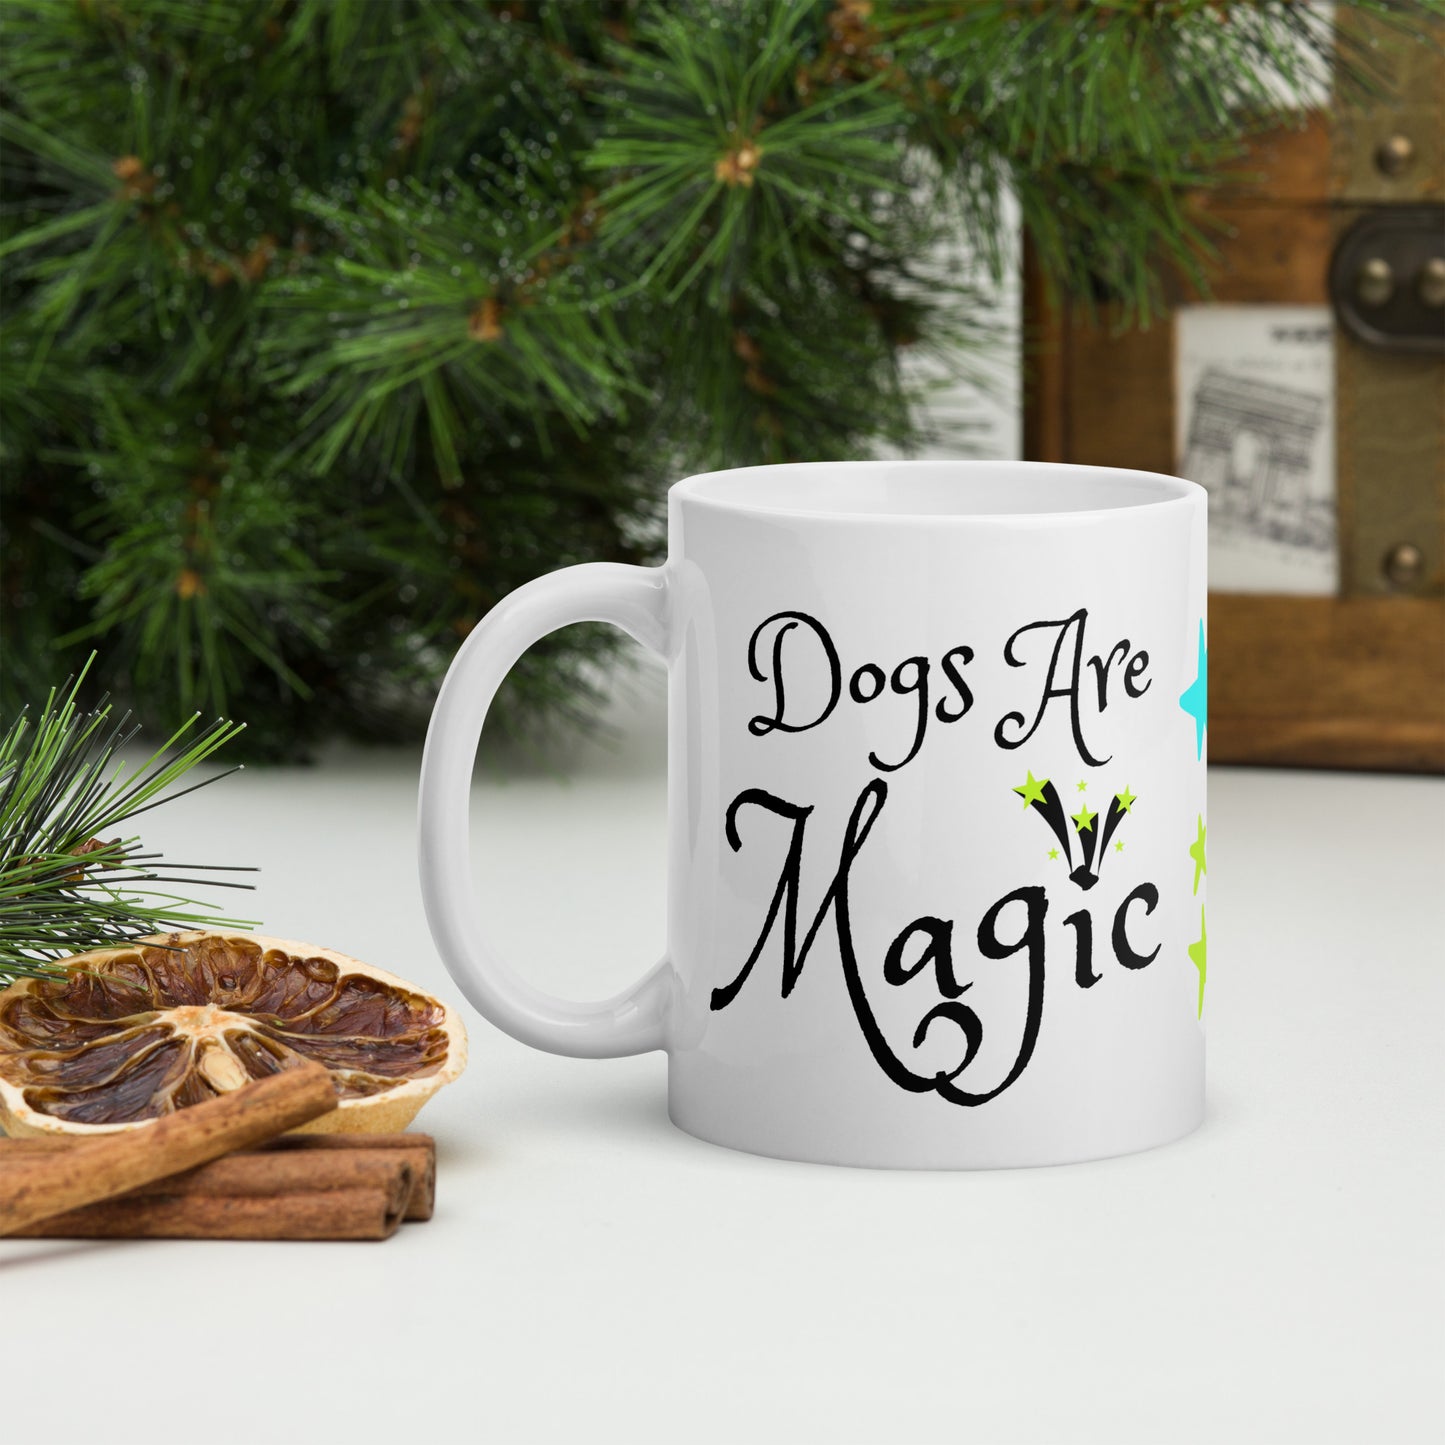 Dogs Are Magic - Dog Lovers Mug